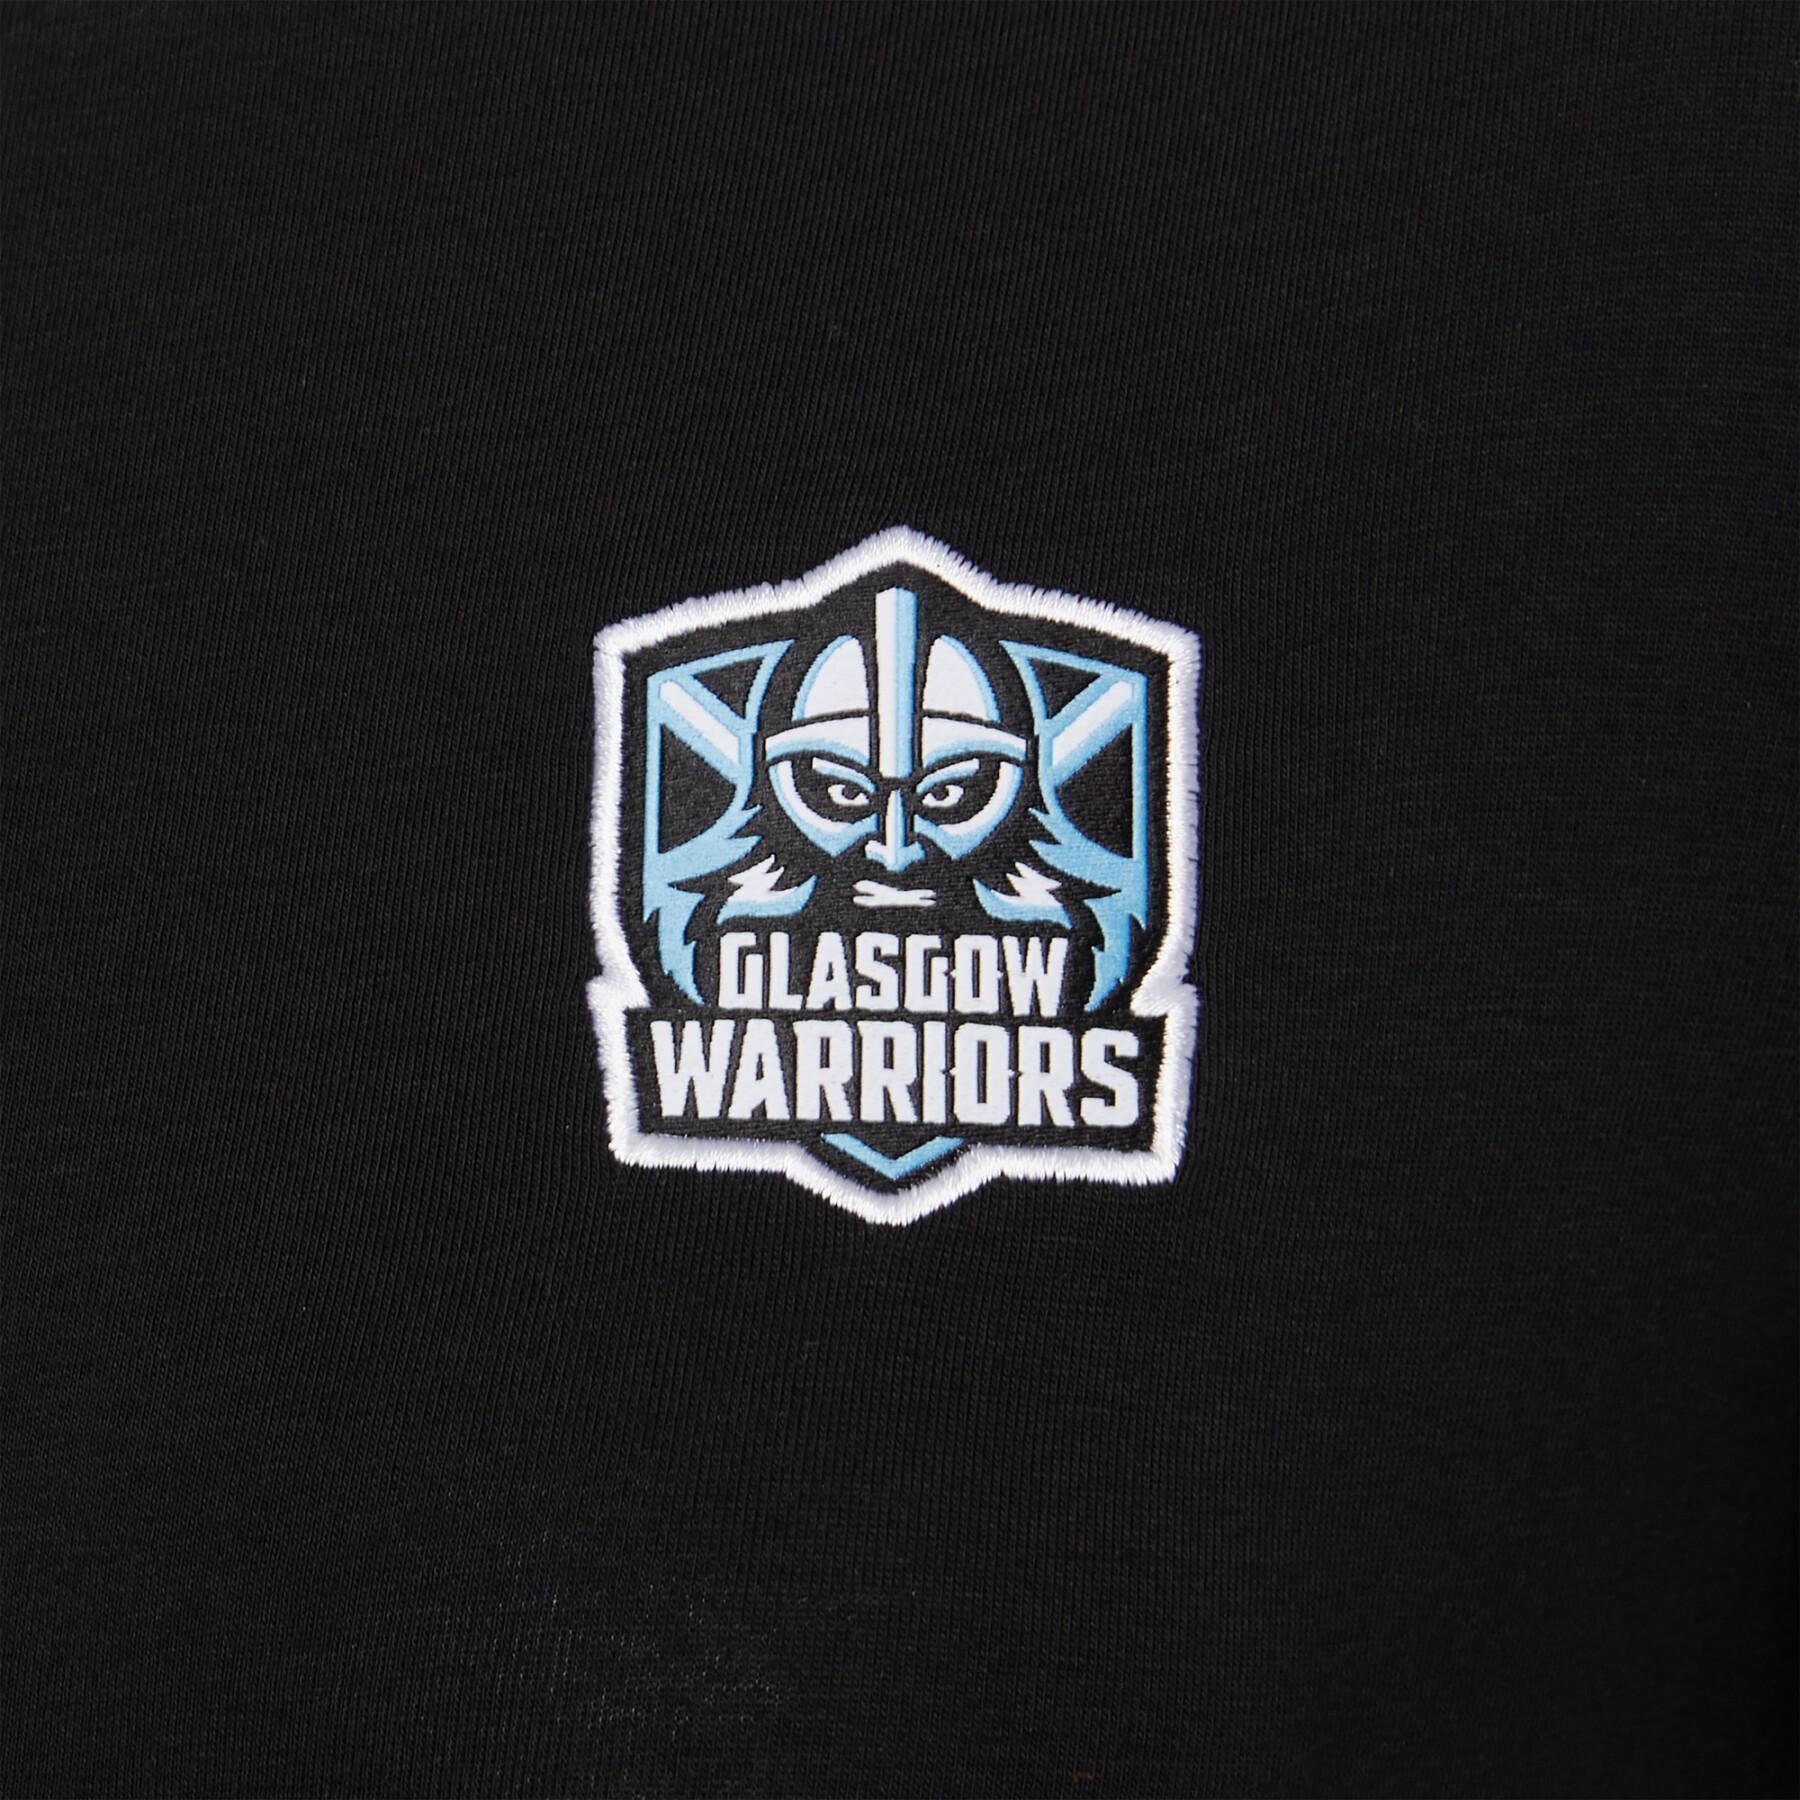 Frauen-T-Shirt Glasgow Warriors 2020/21